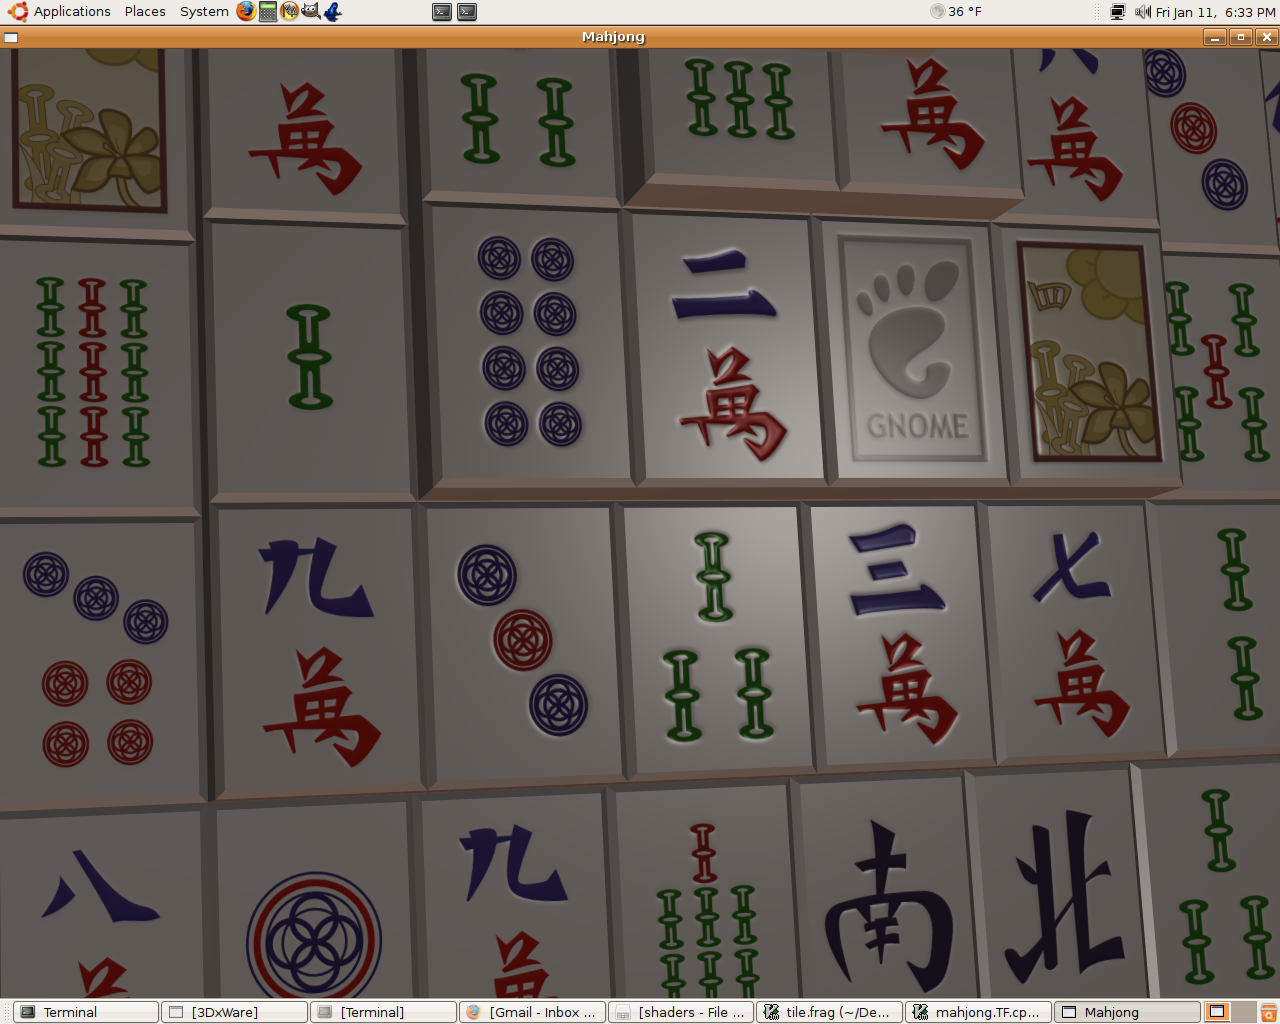 Mahjong solitaire